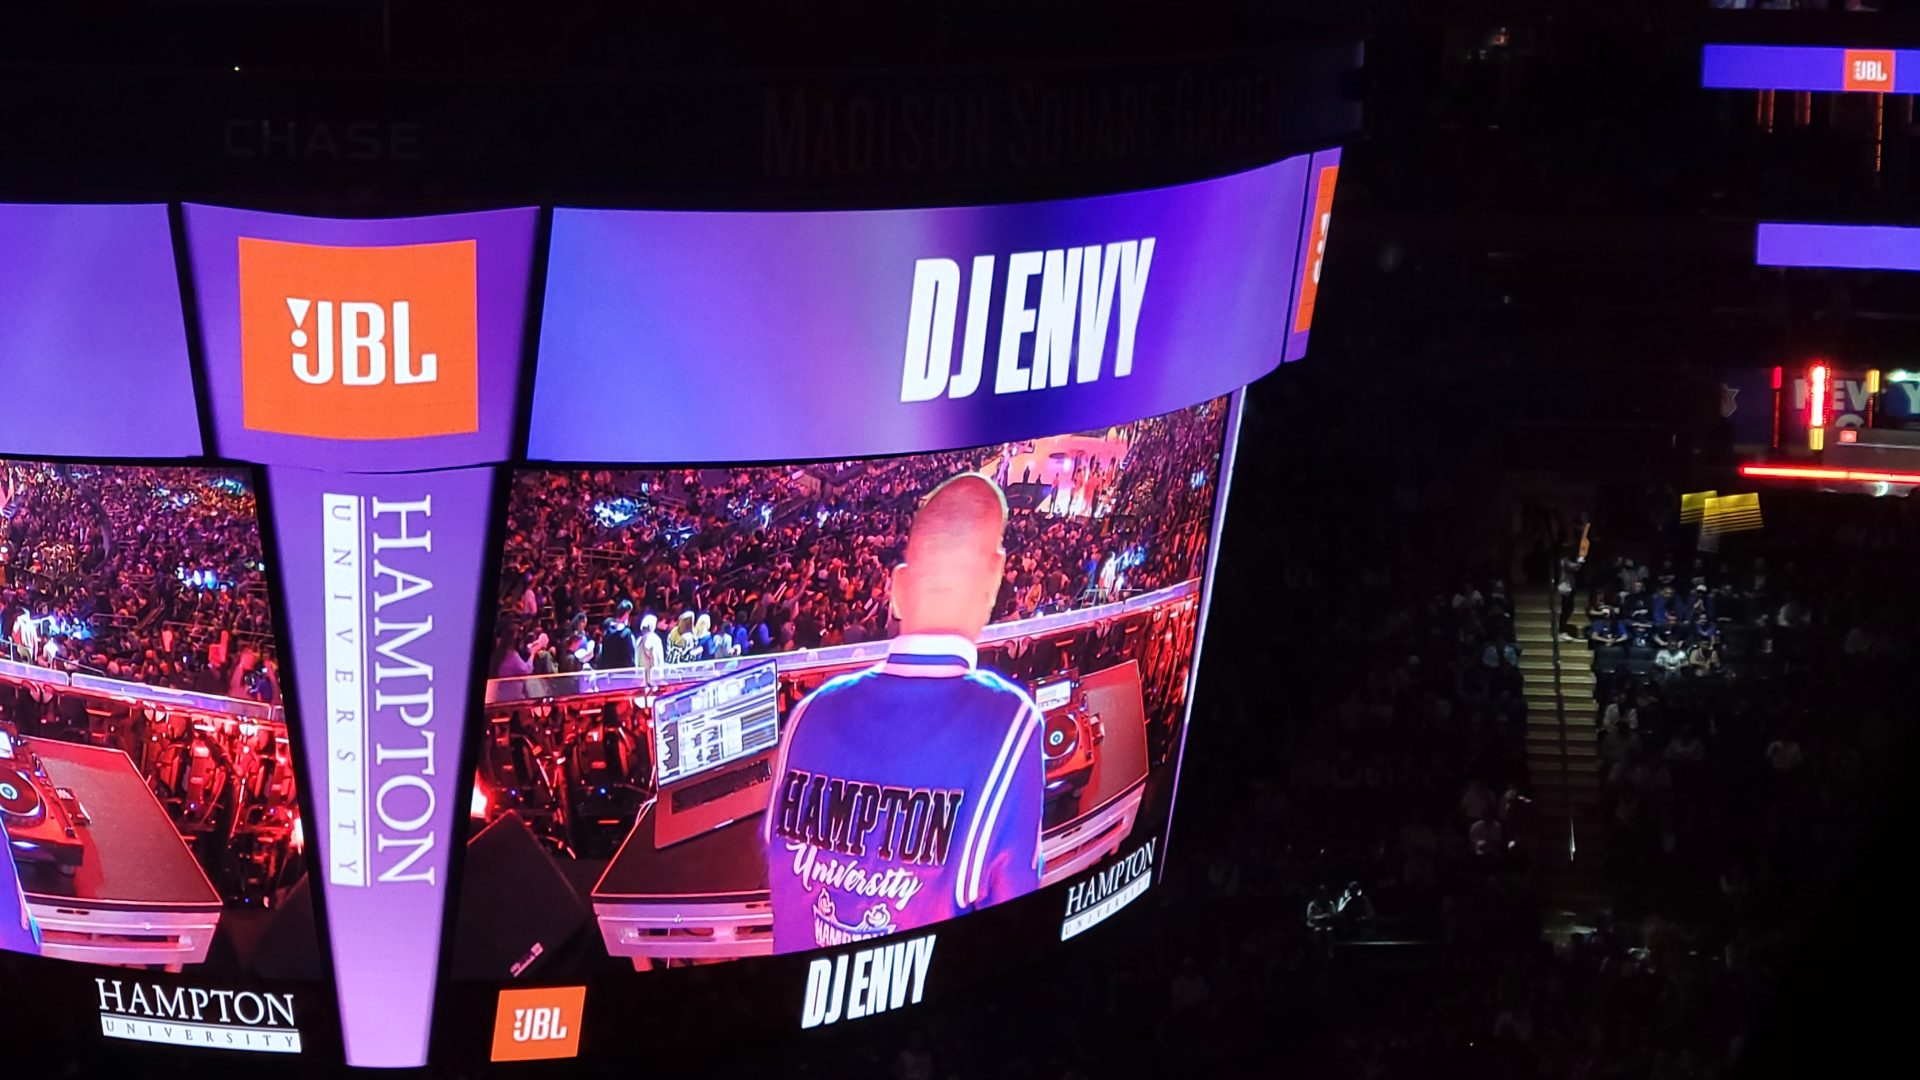 DJ Envy spinning at Madison Square Garden